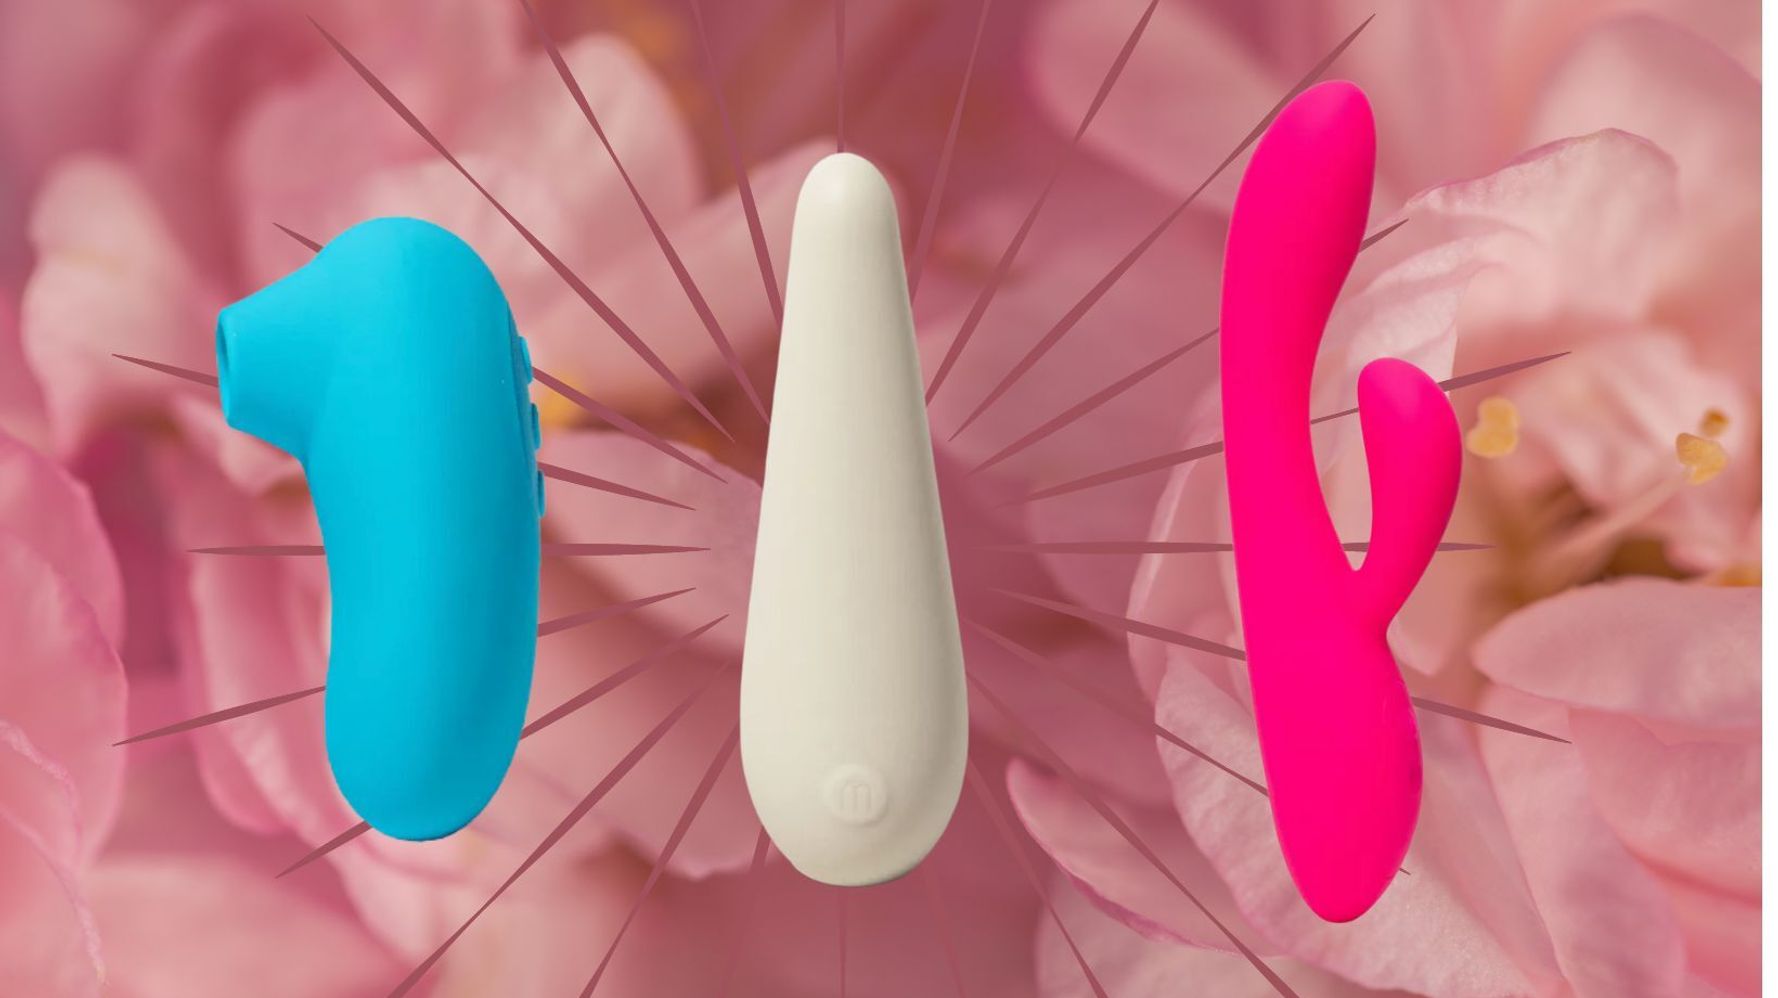 LuLu Vibrator Wand, G Spot Vibrator, Mini Vibrator, Wand Vibrator, Vibrator  Bullet, Female Vibrator, Clitoris Vibrator & Vibrator Sex Toy | Vibradores